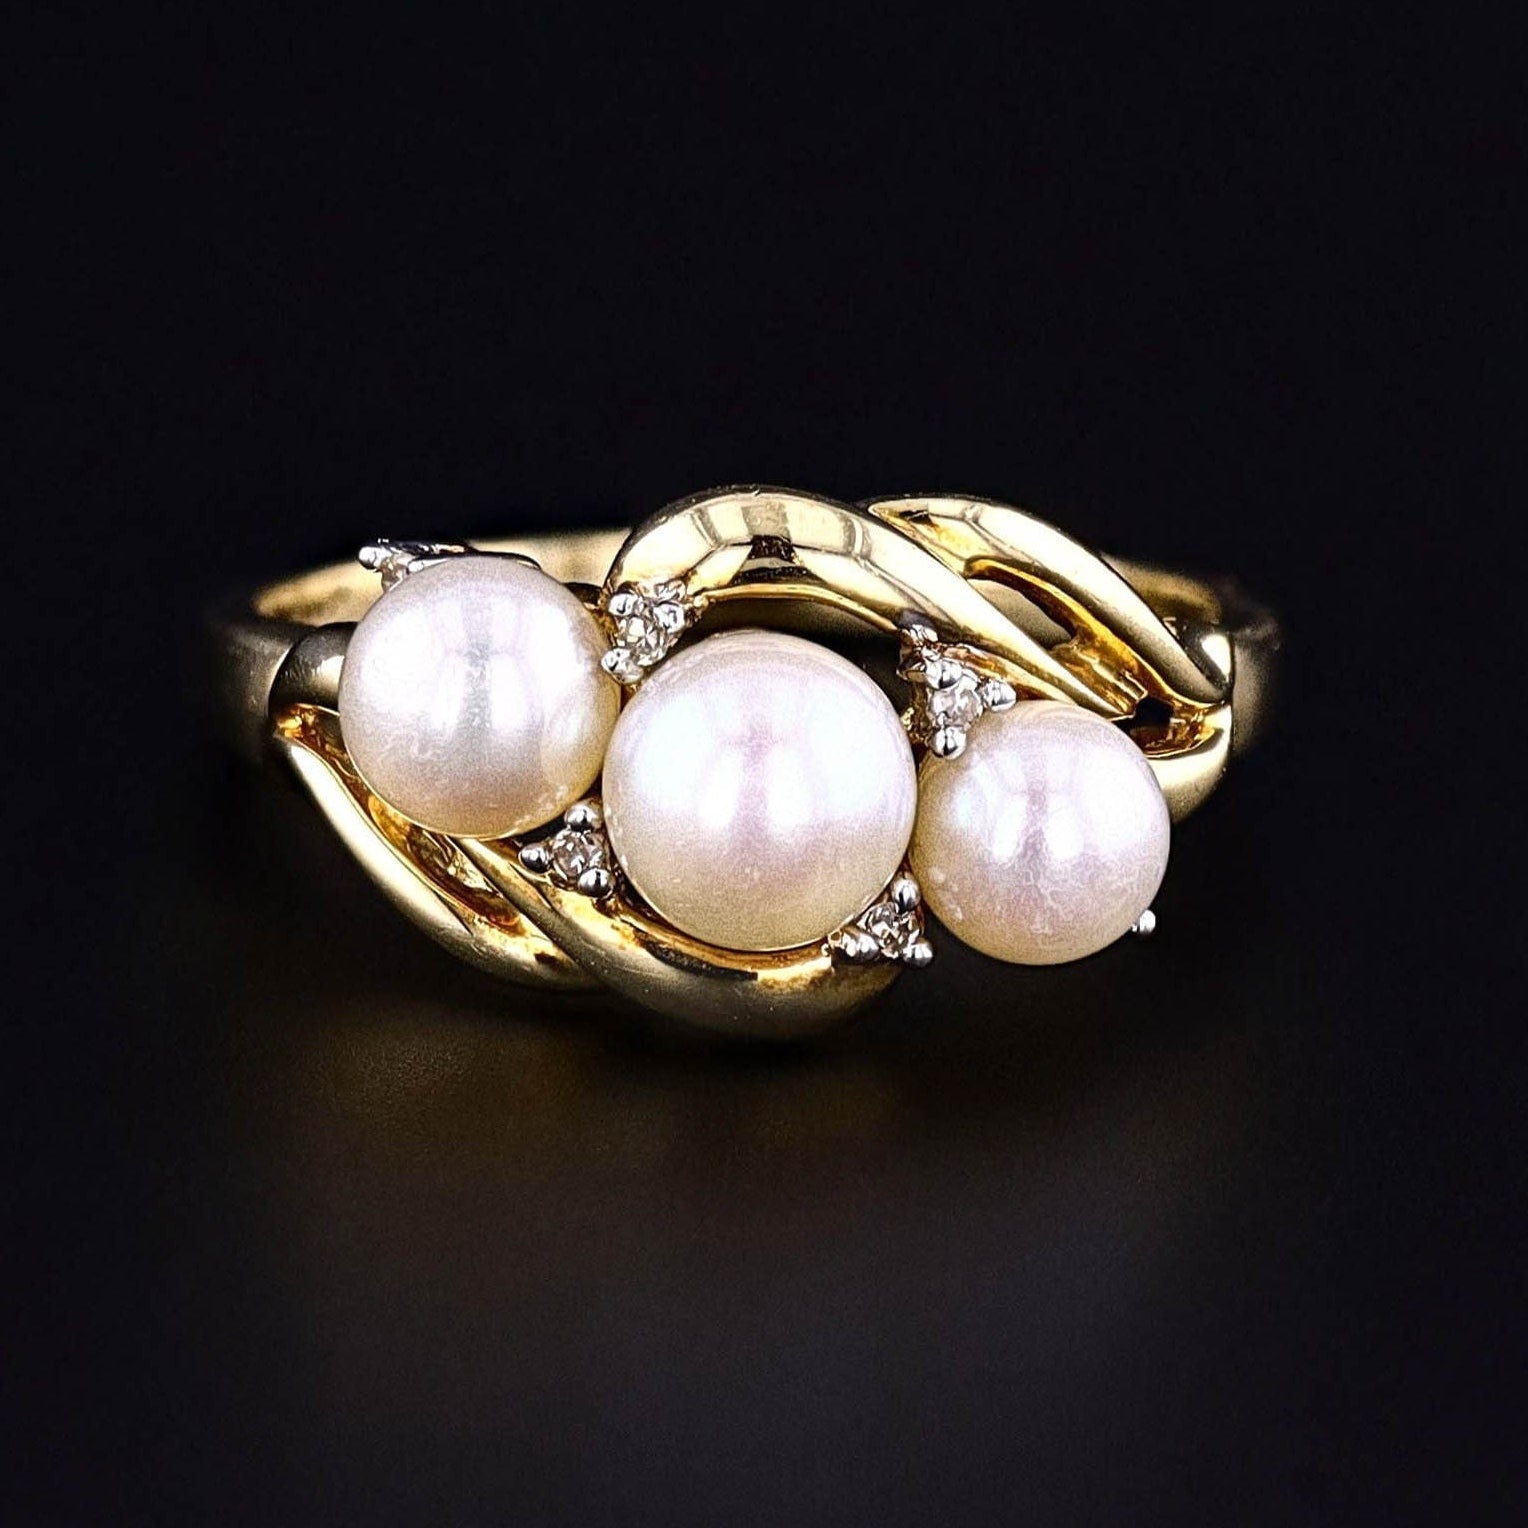 Vintage Pearl Ring of 10k Gold